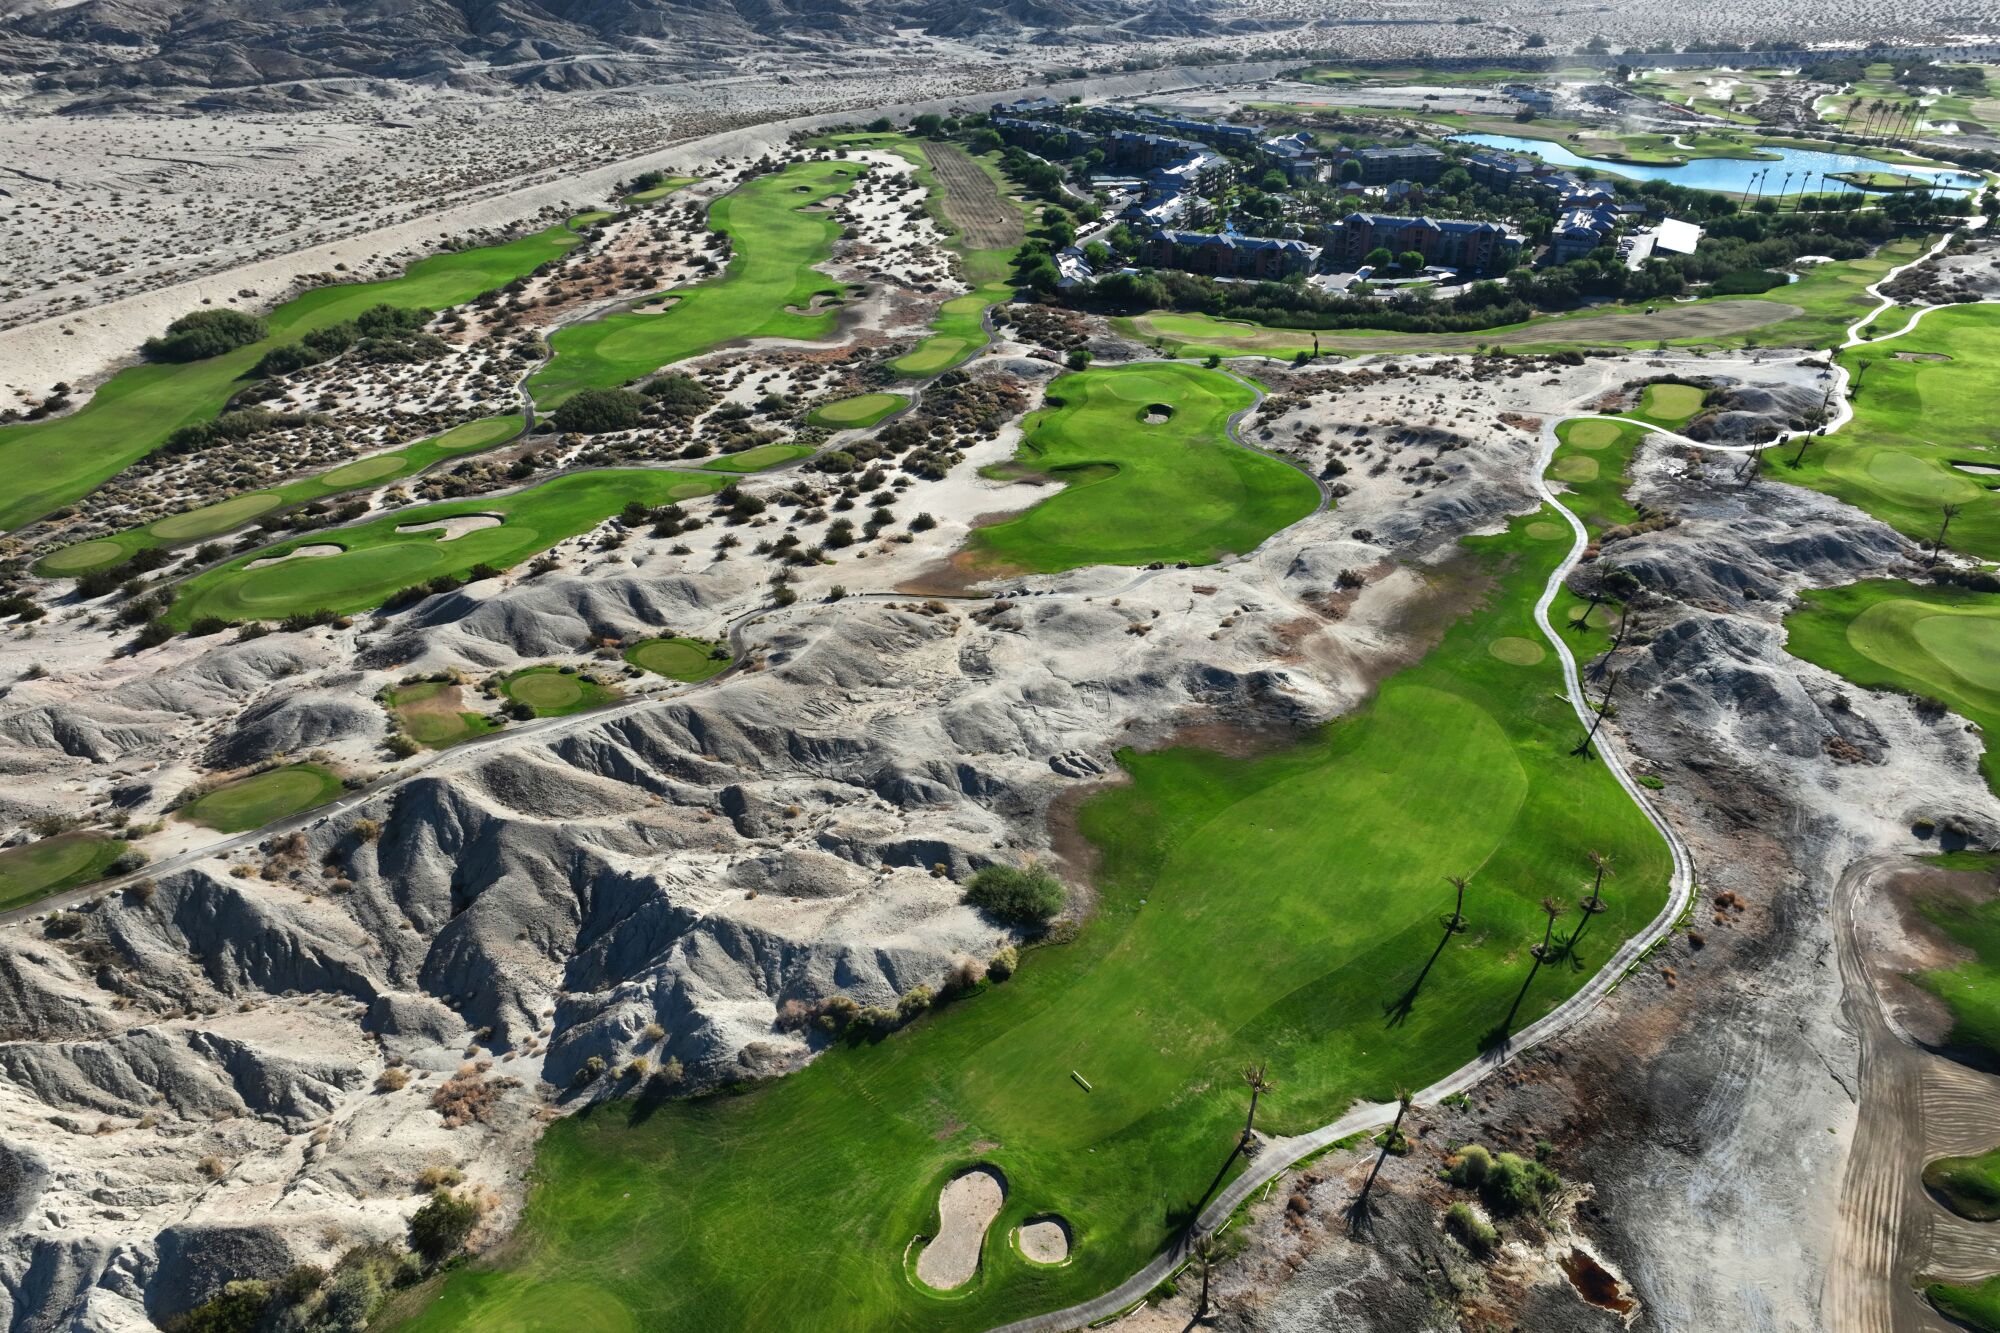 A golf course in a desert